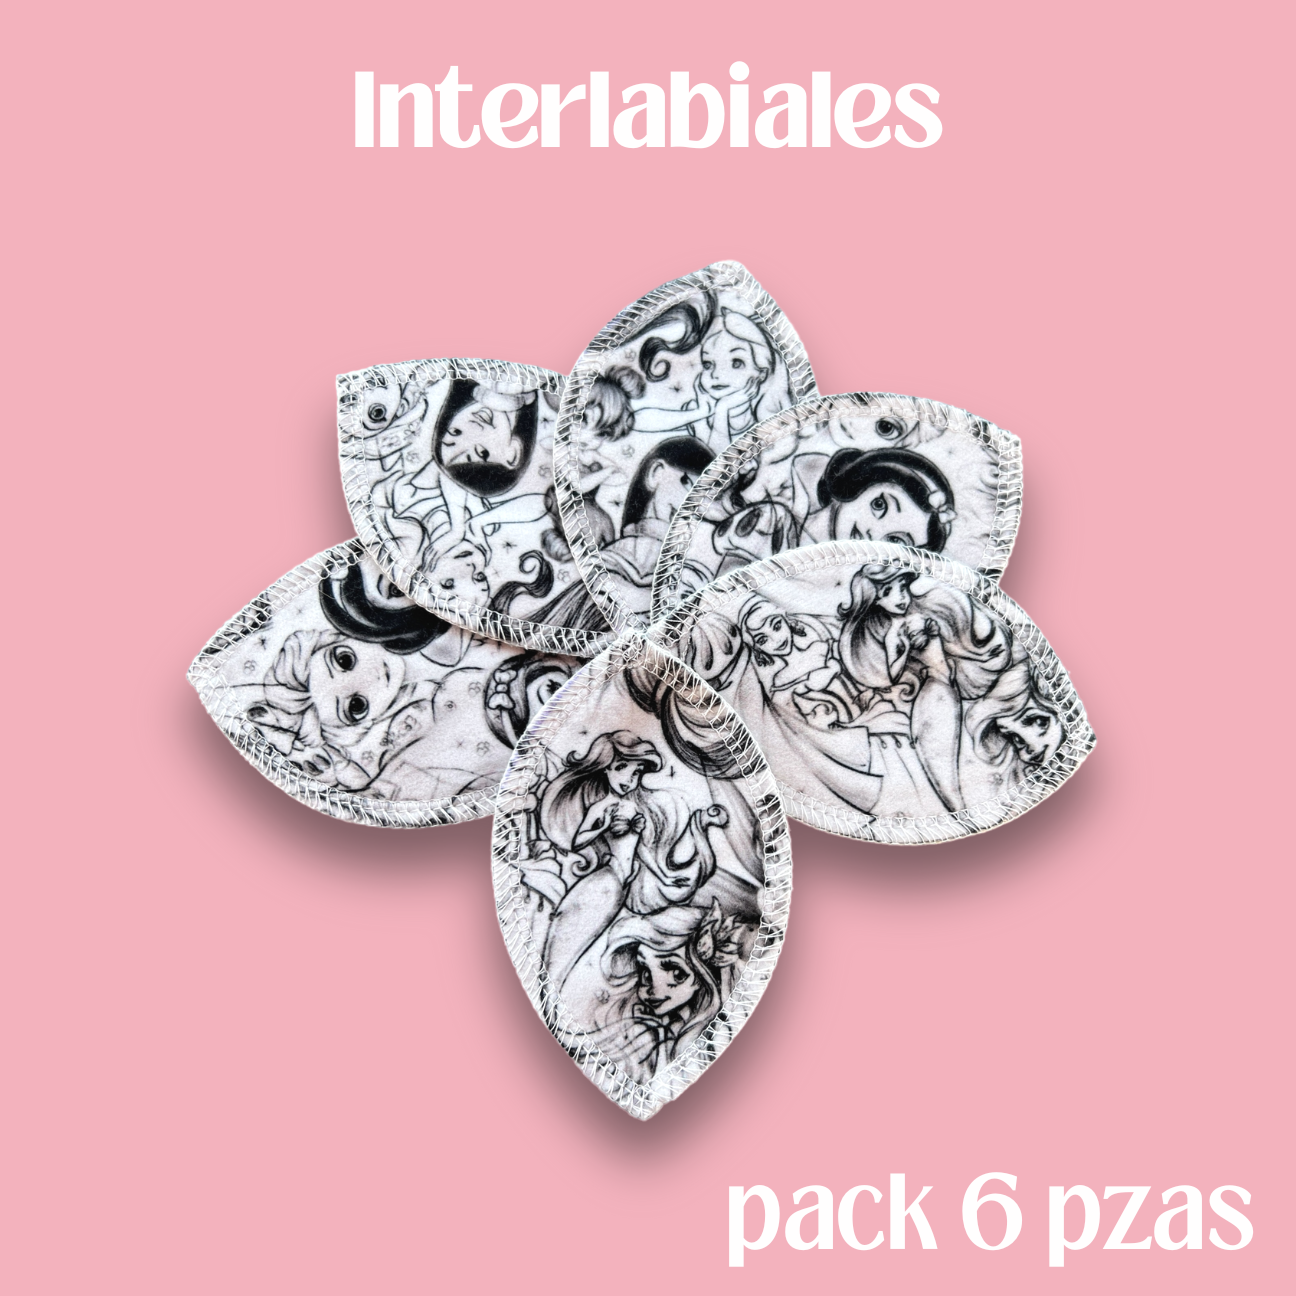 Interlabiales princesas pack 6 pzas